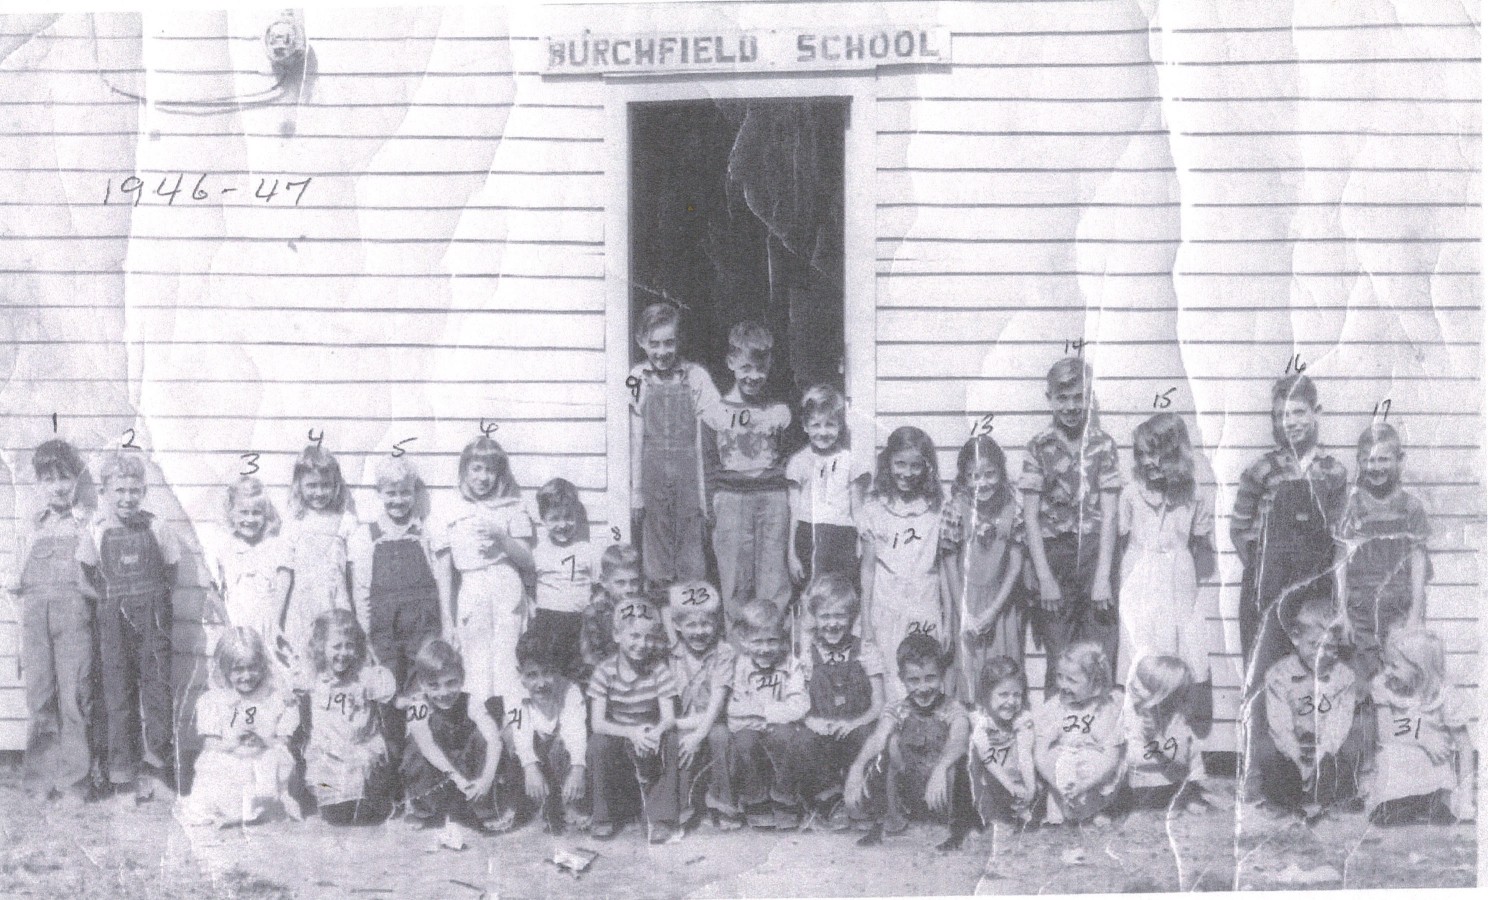 Burchfield School, Bell County, September 21, 1949